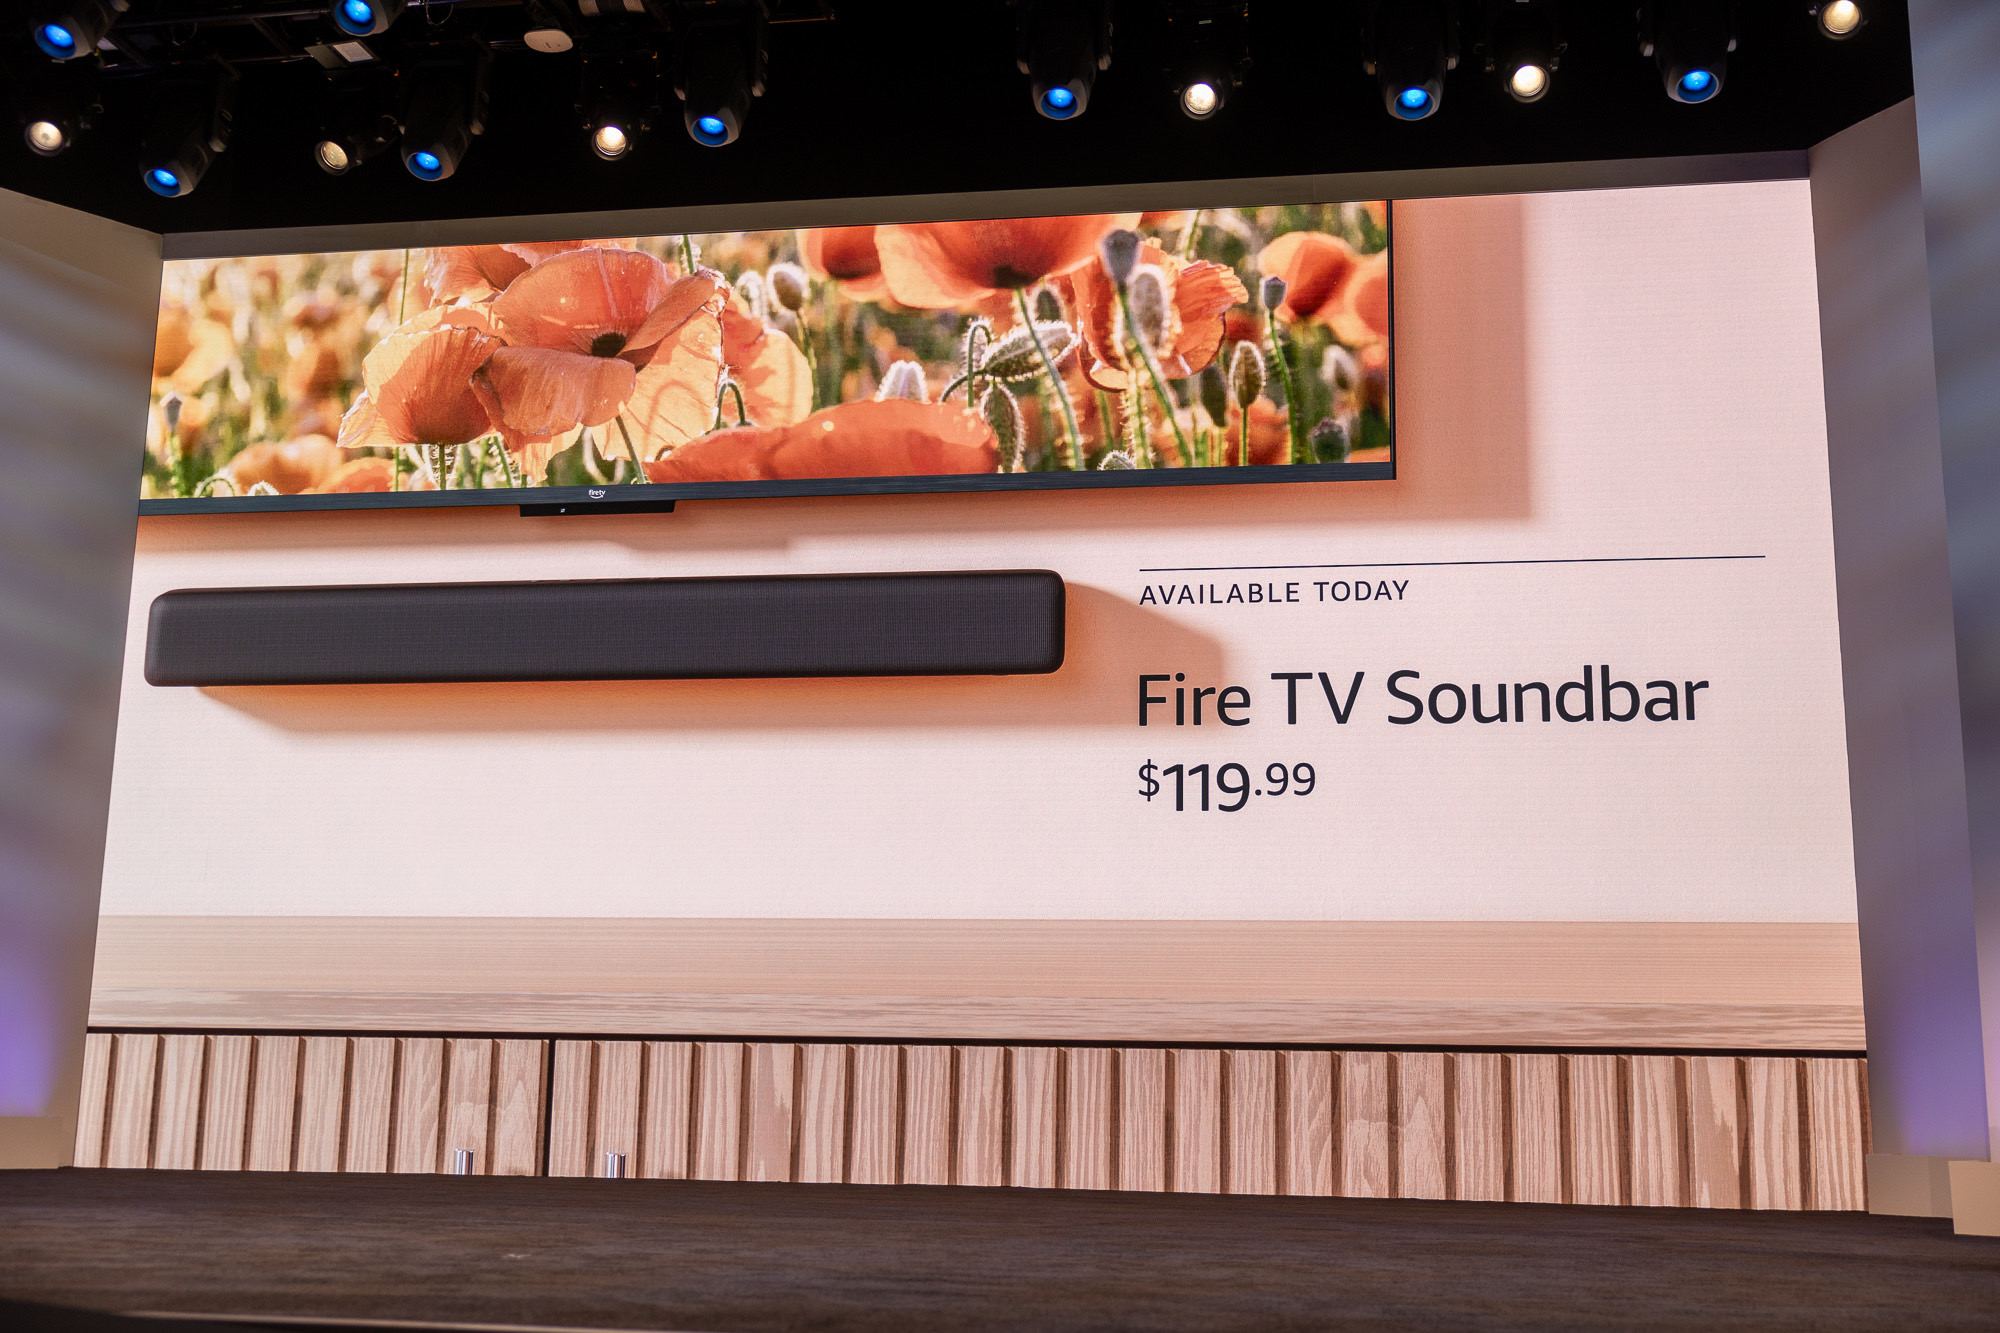 unveils new Fire TV Stick 4K models, updated Fire HD 10